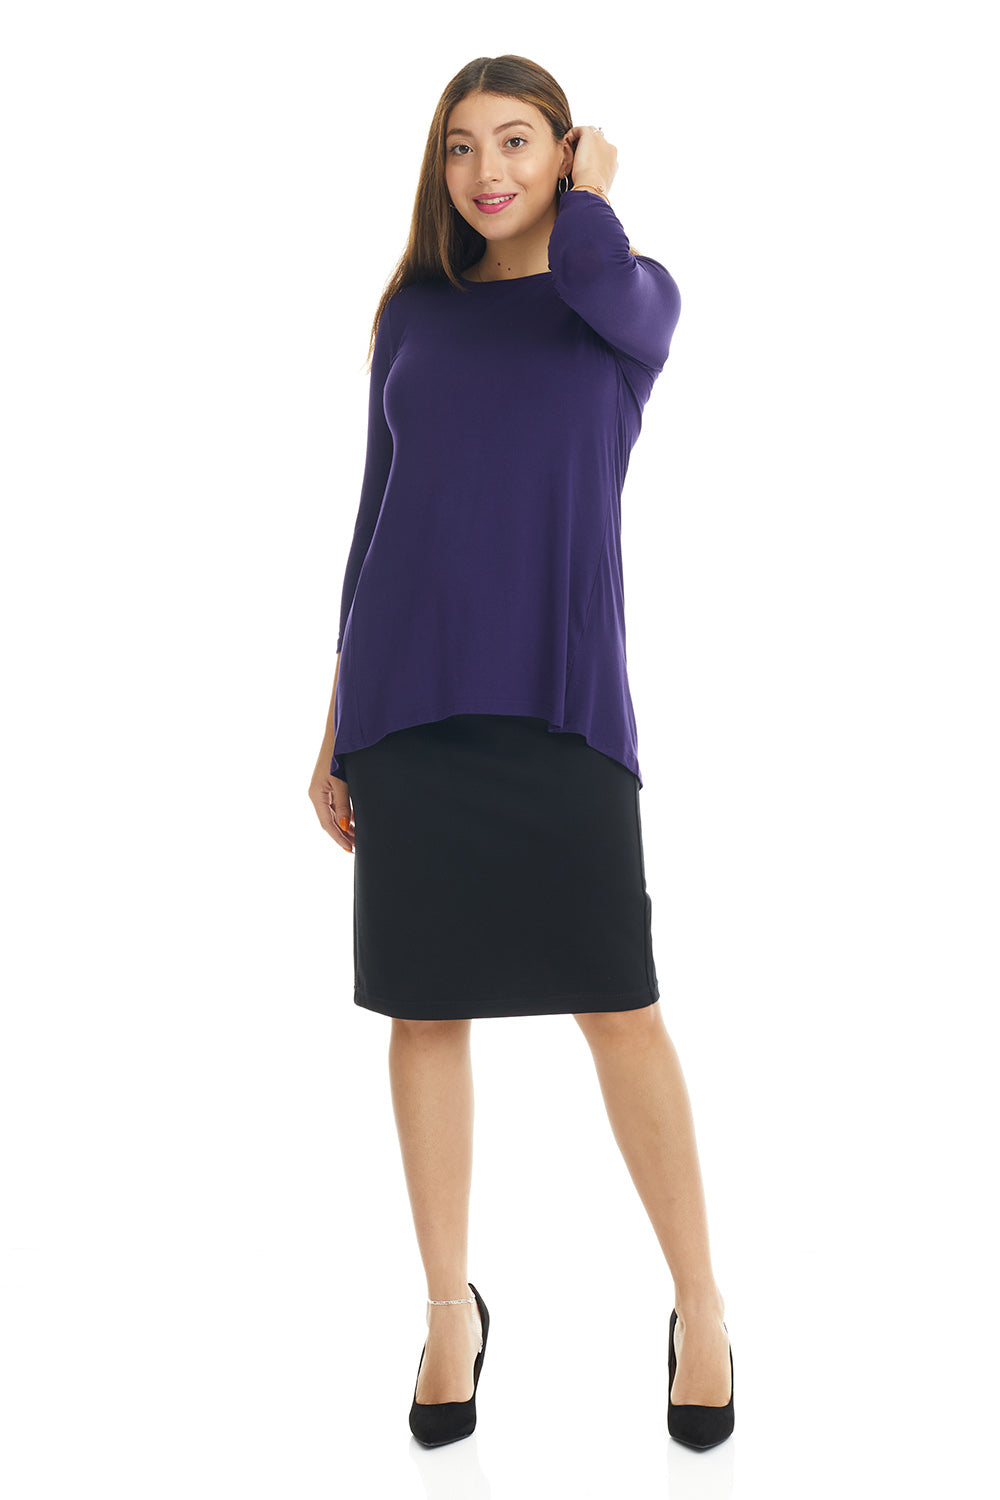 Esteez IVY top - Womens 3/4 Sleeve Loose Fitting Shirt - PURPLE